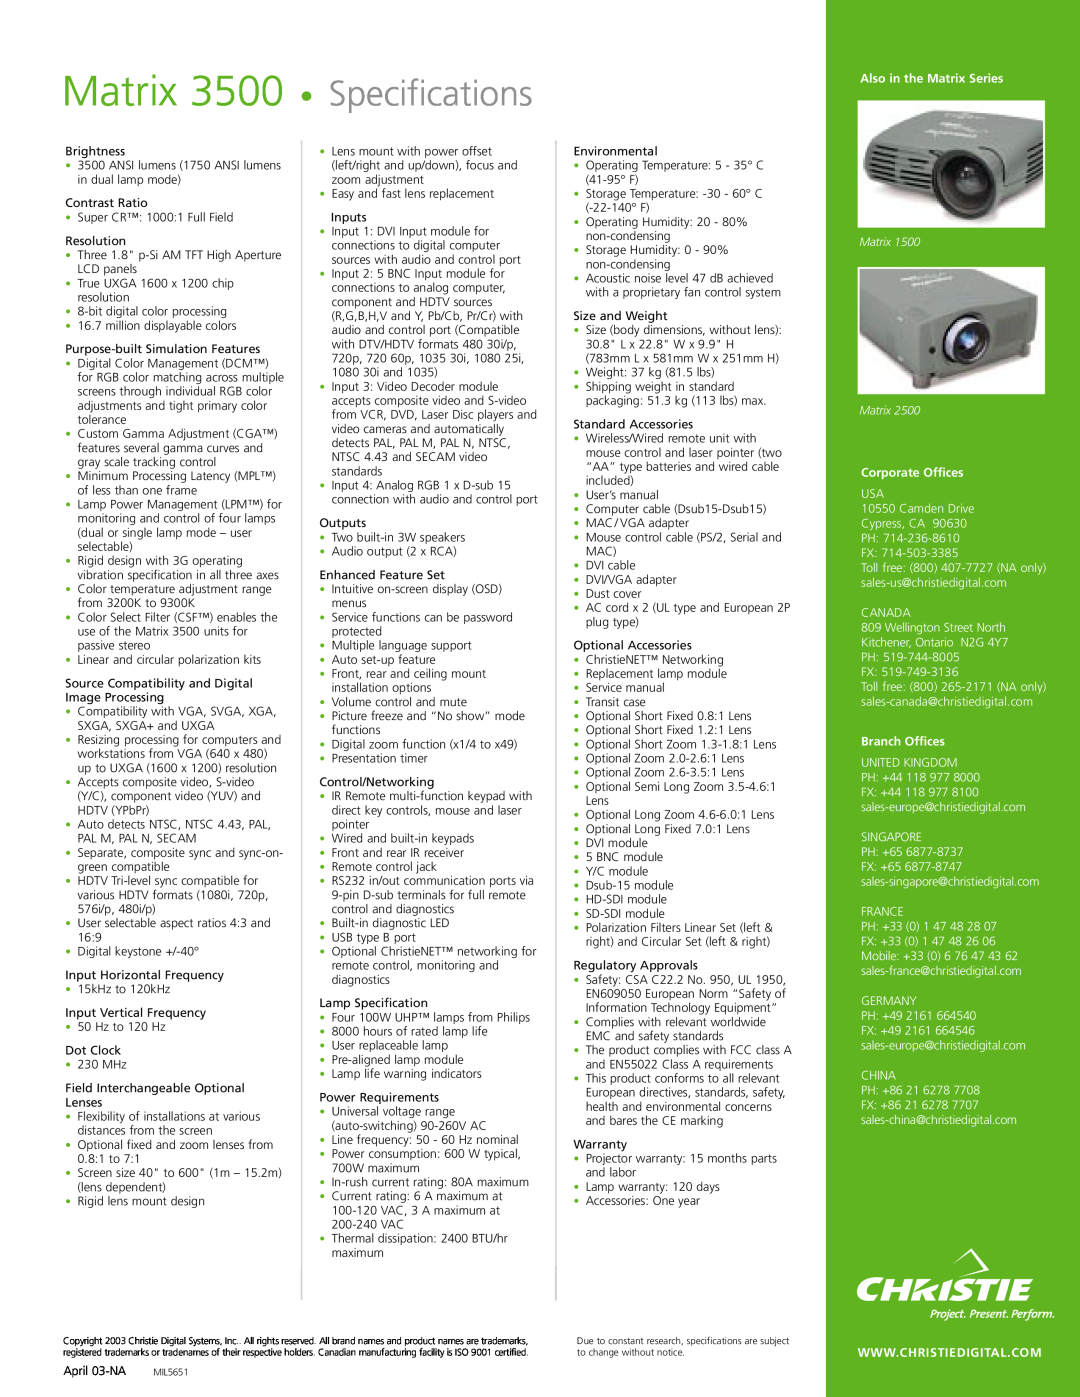 Christie Digital Systems manual Matrix 3500 Specifications, Also in the Matrix Series, Matrix Matrix, Corporate Offices 